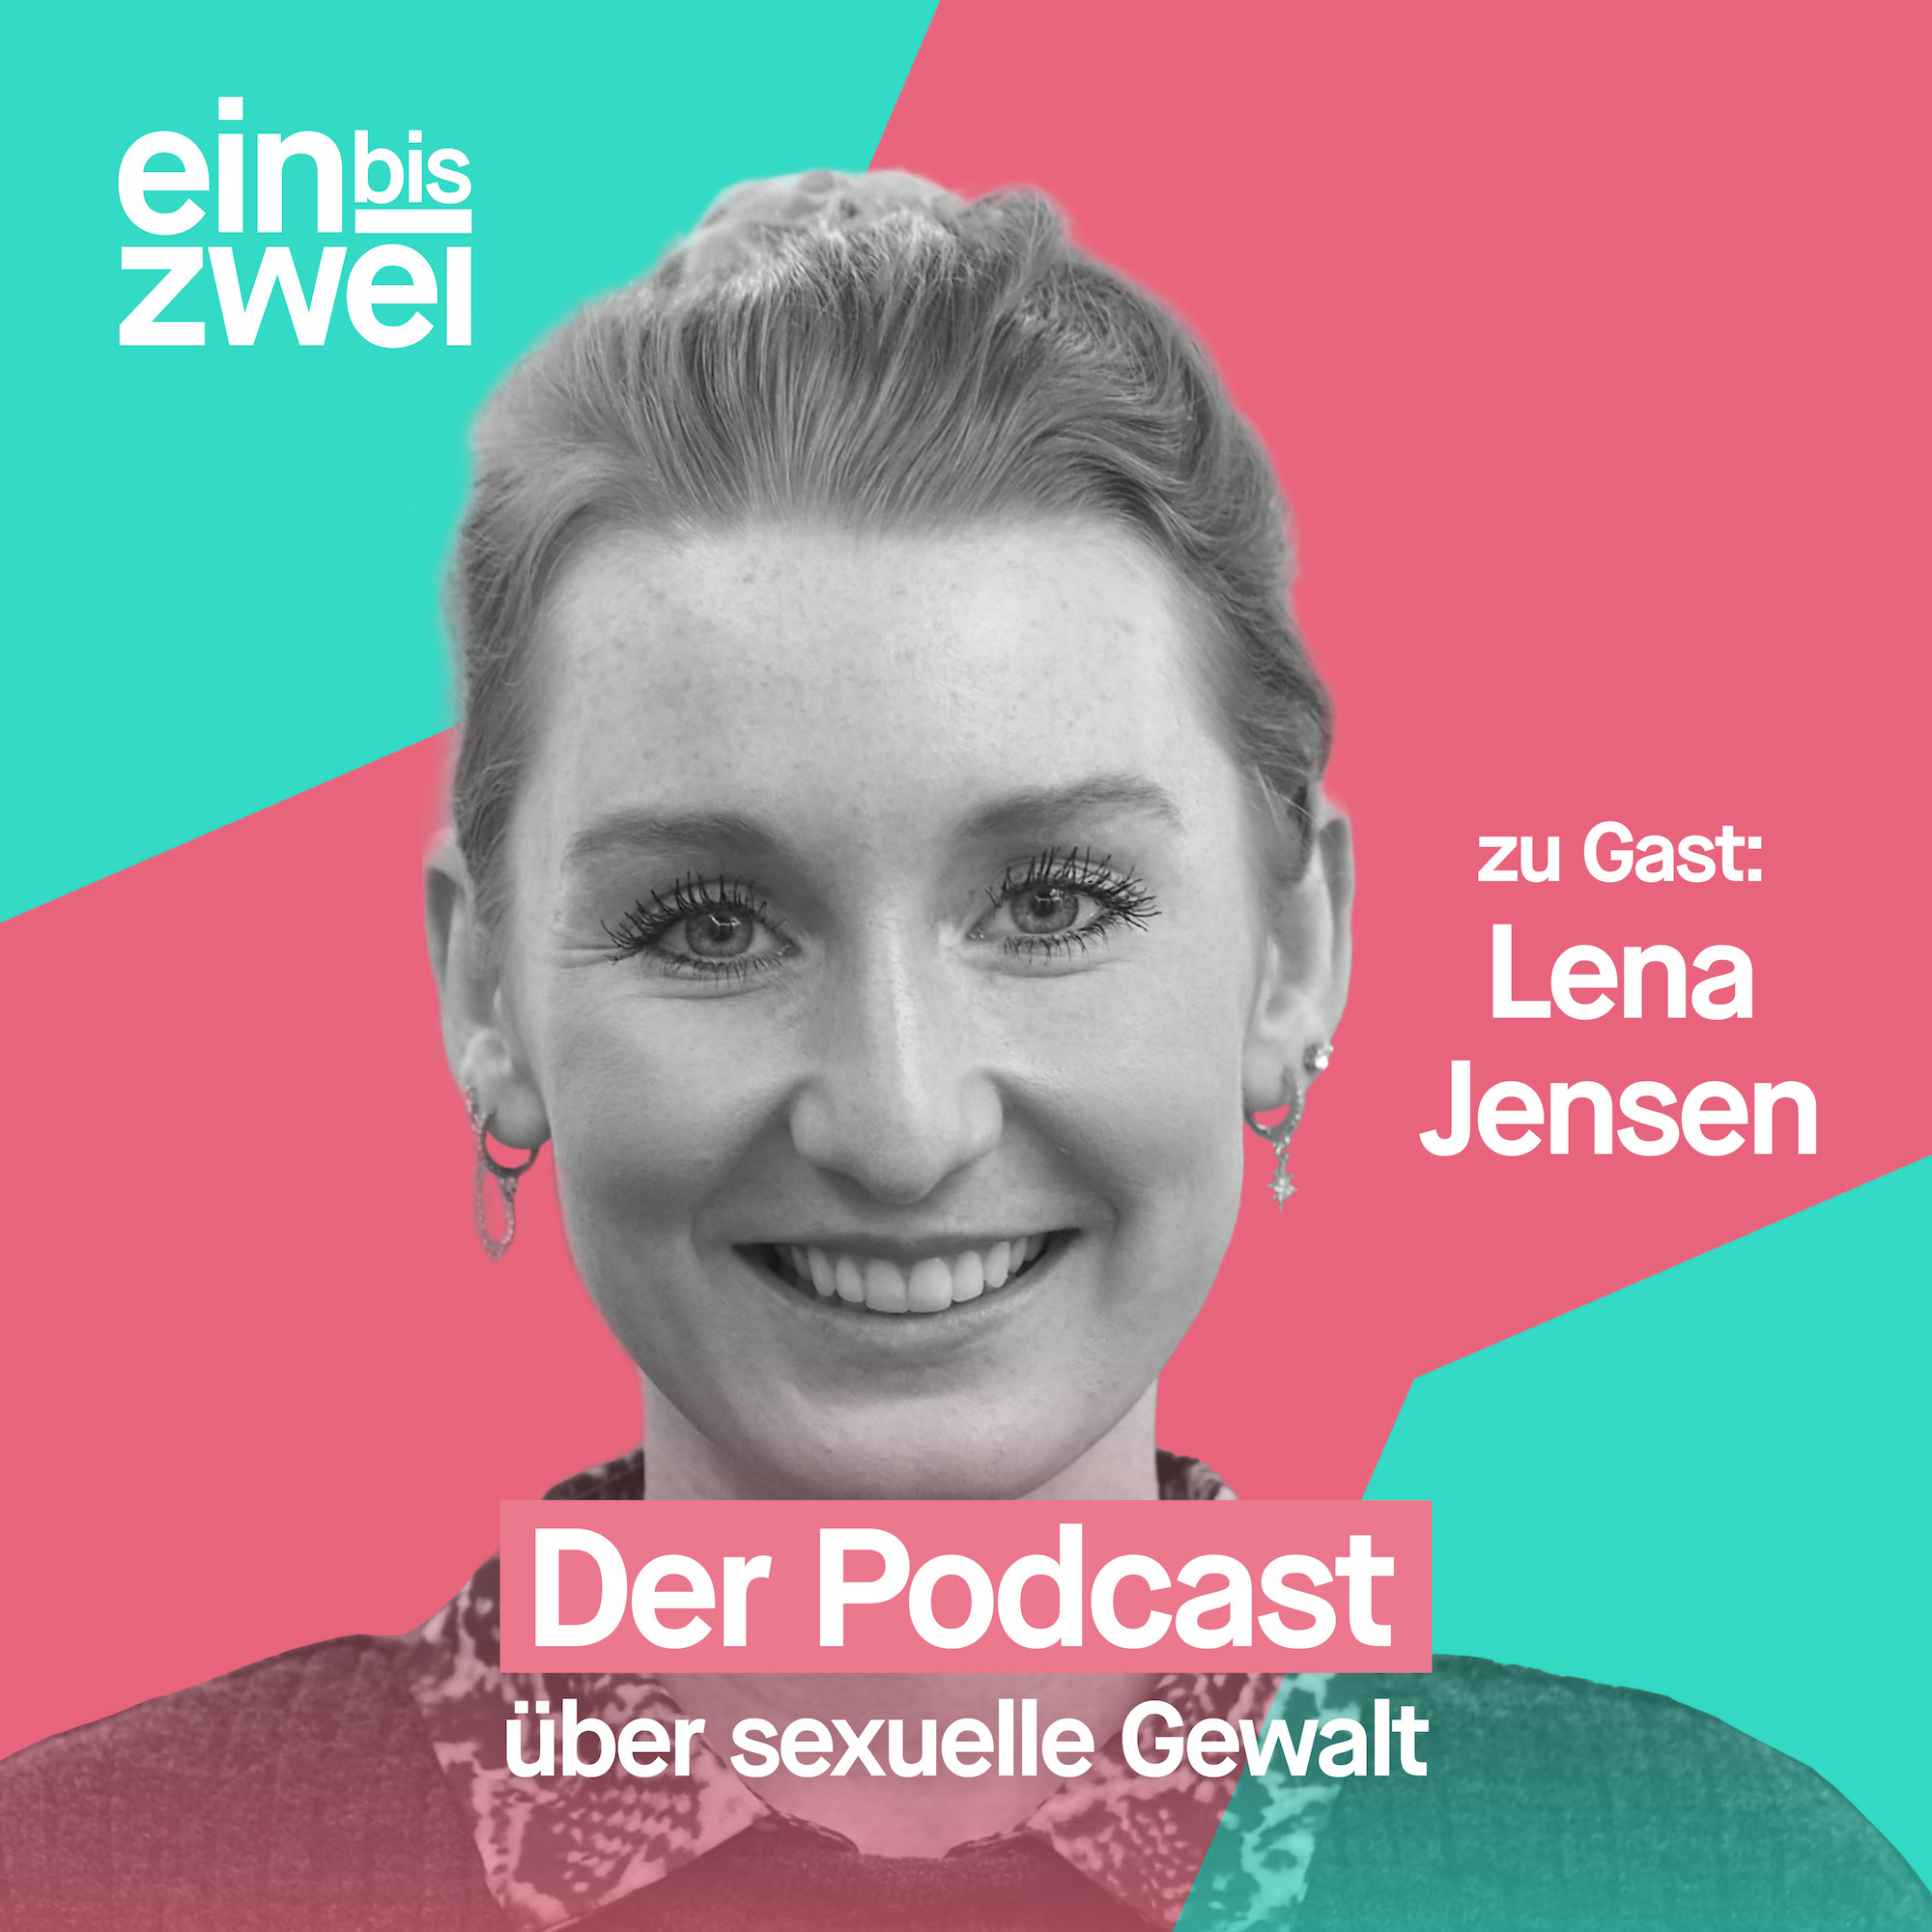 Lena Jensen